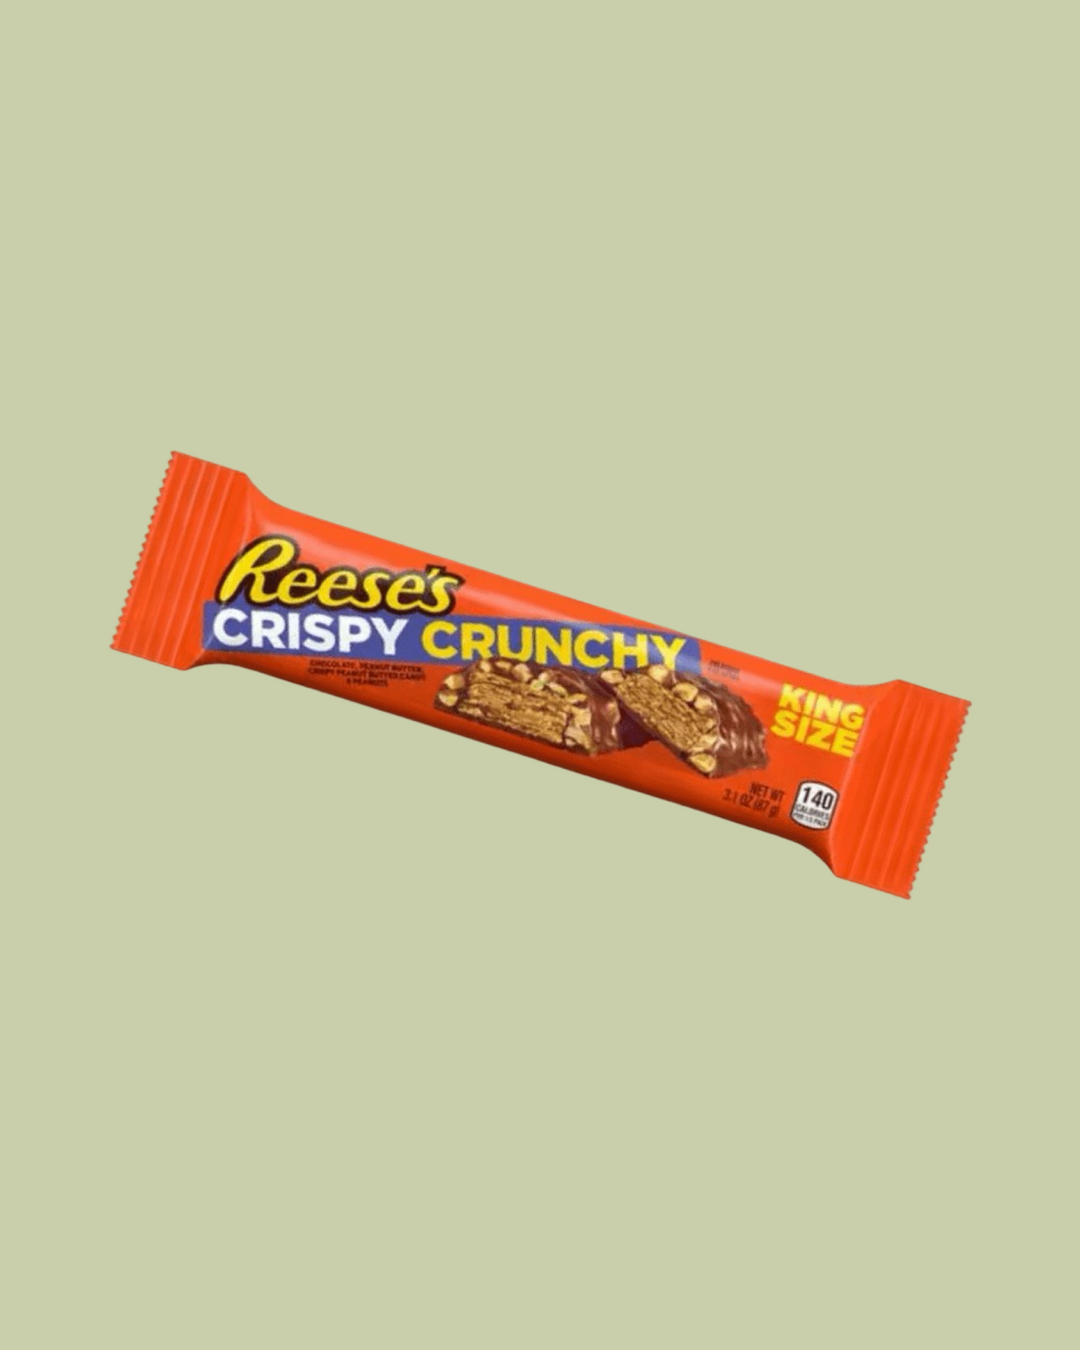 Reese's Crispy Crunchy Bar King Size